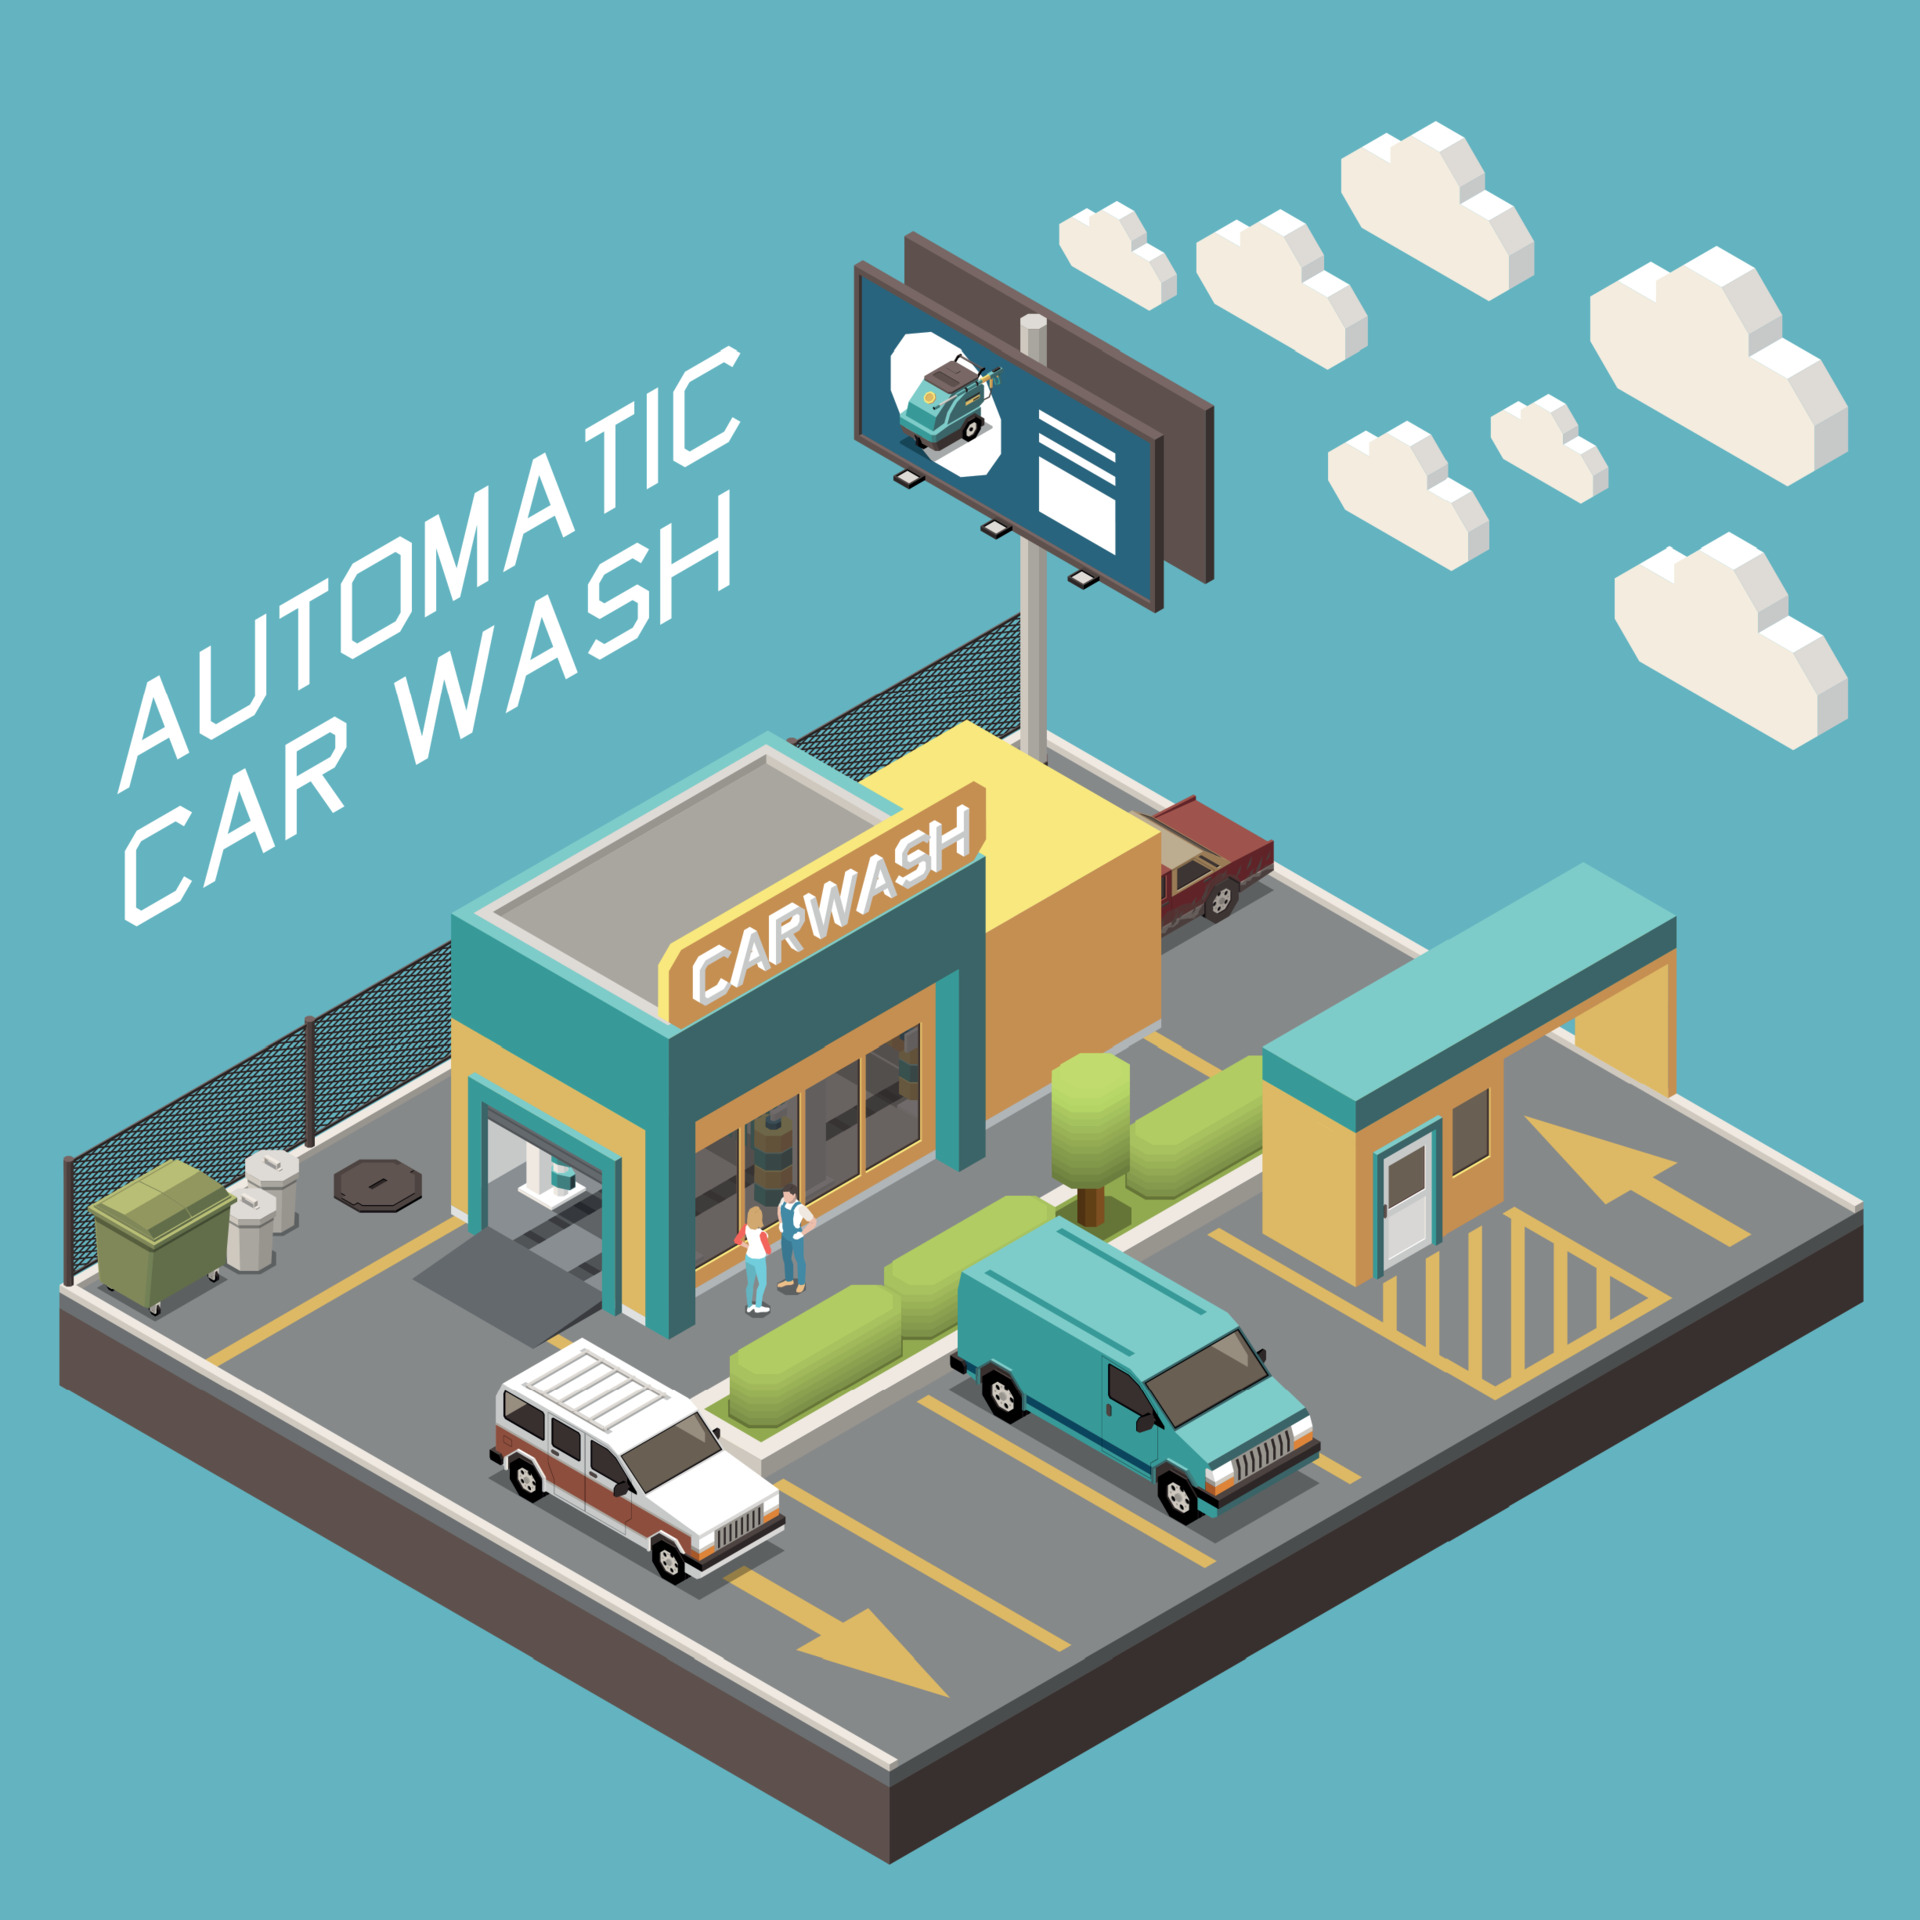 Custom Carwash Concepts